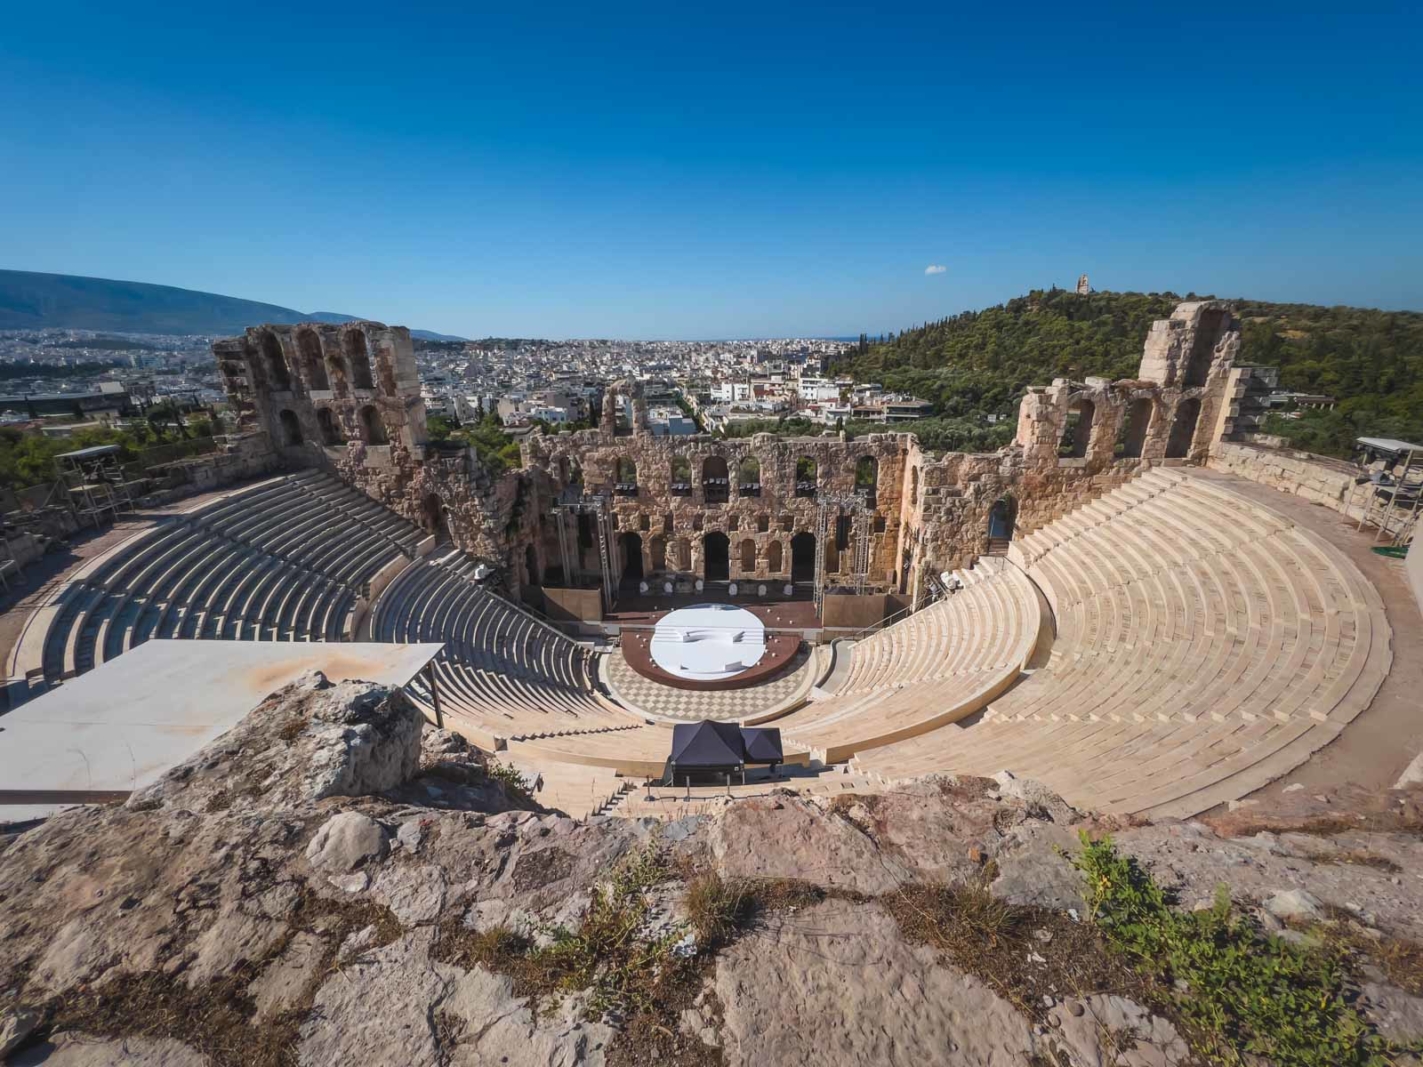 visit acropolis reddit